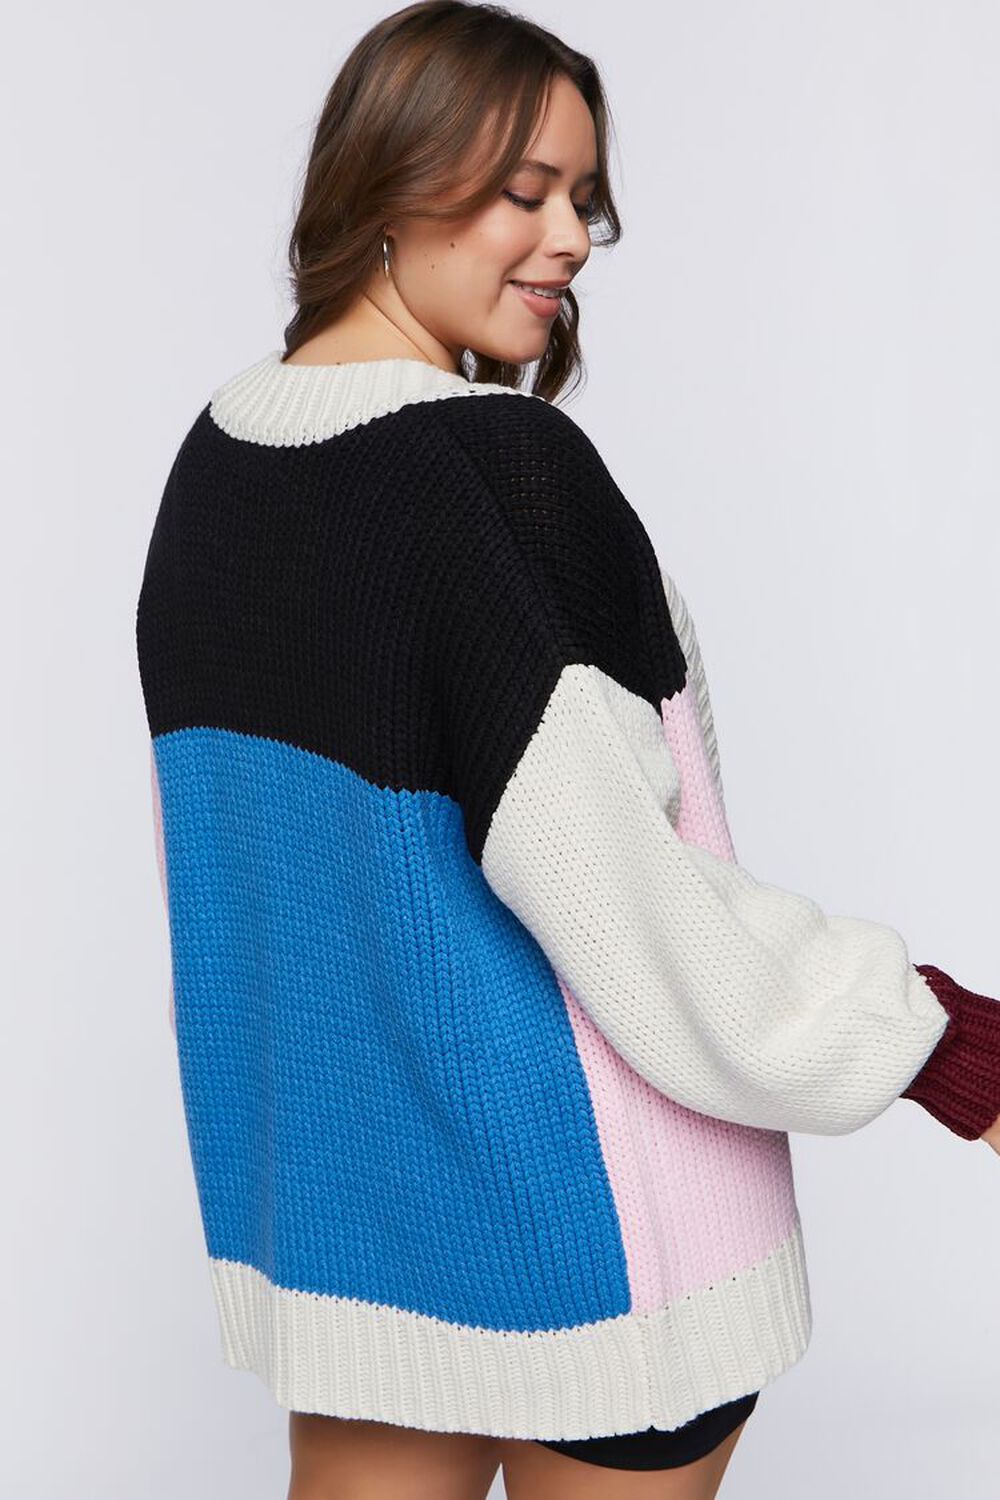 BUBBLE GUM/MULTI Plus Size Chunky Colorblock Cardigan Sweater, image 3